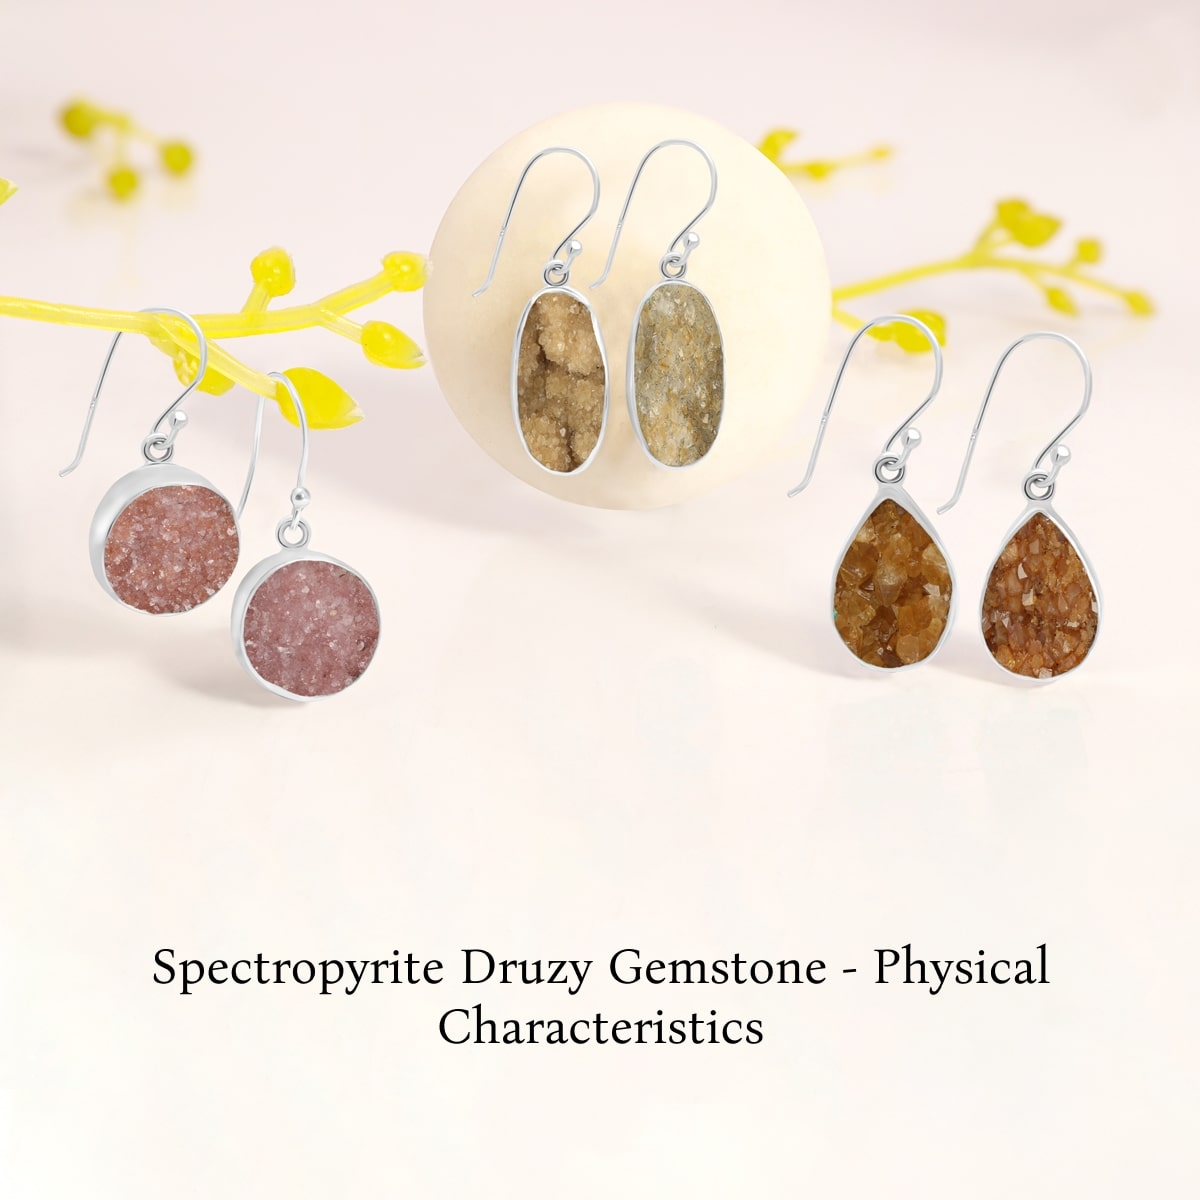 Physical Properties of Spectropyrite Druzy Gemstone